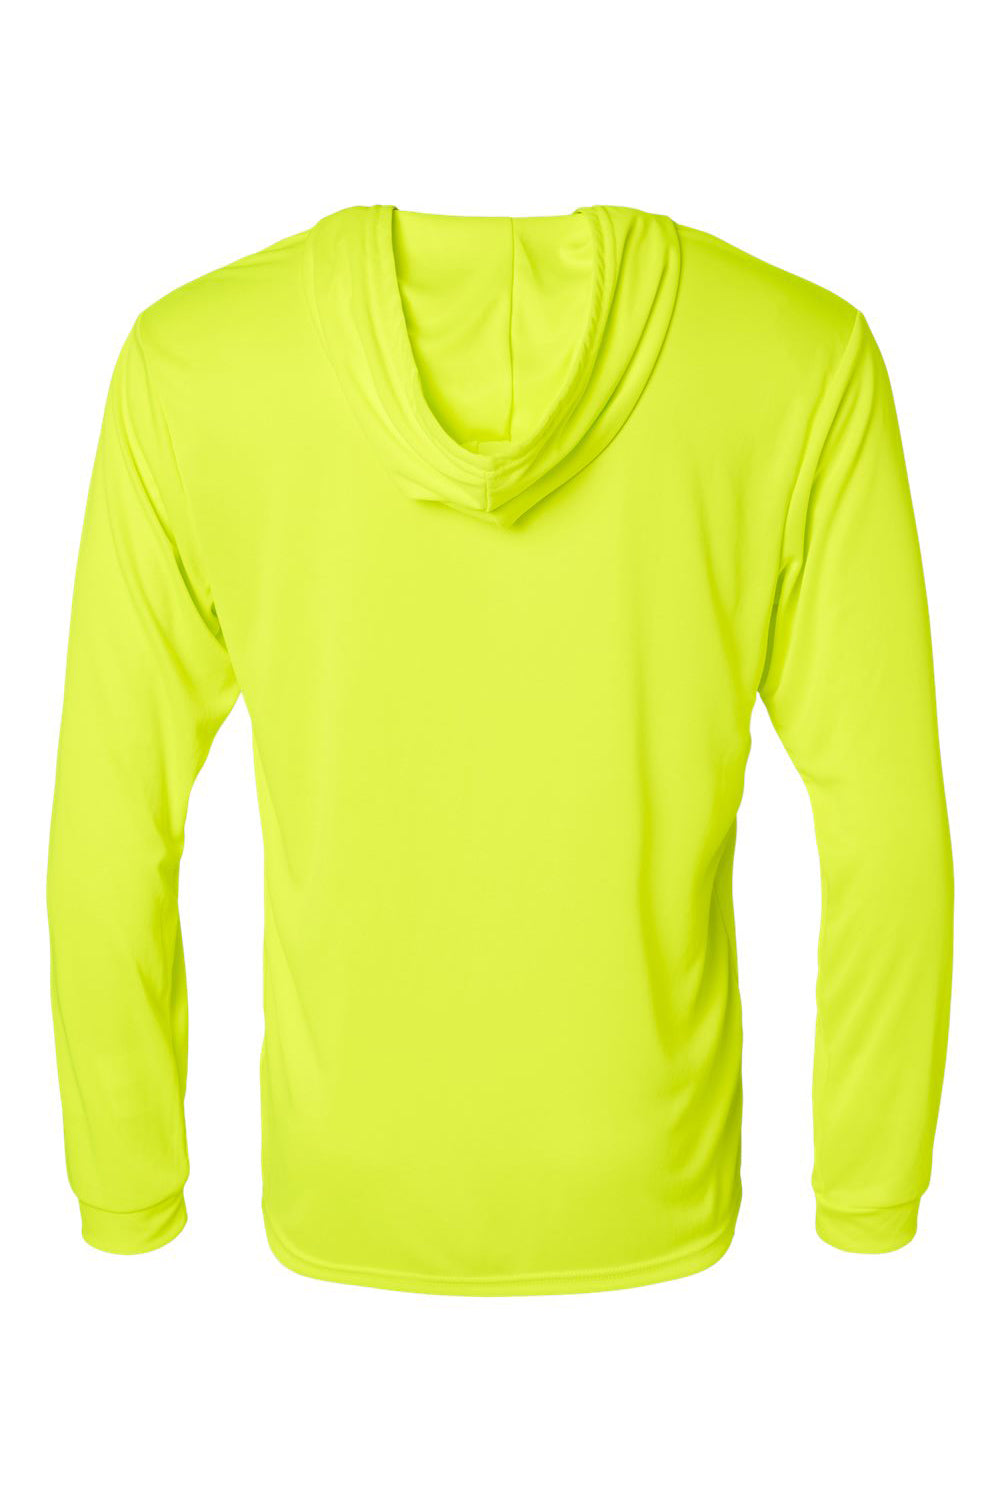 Paragon 220 Mens Bahama Performance Long Sleeve Hooded T-Shirt Hoodie Safety Green Flat Back